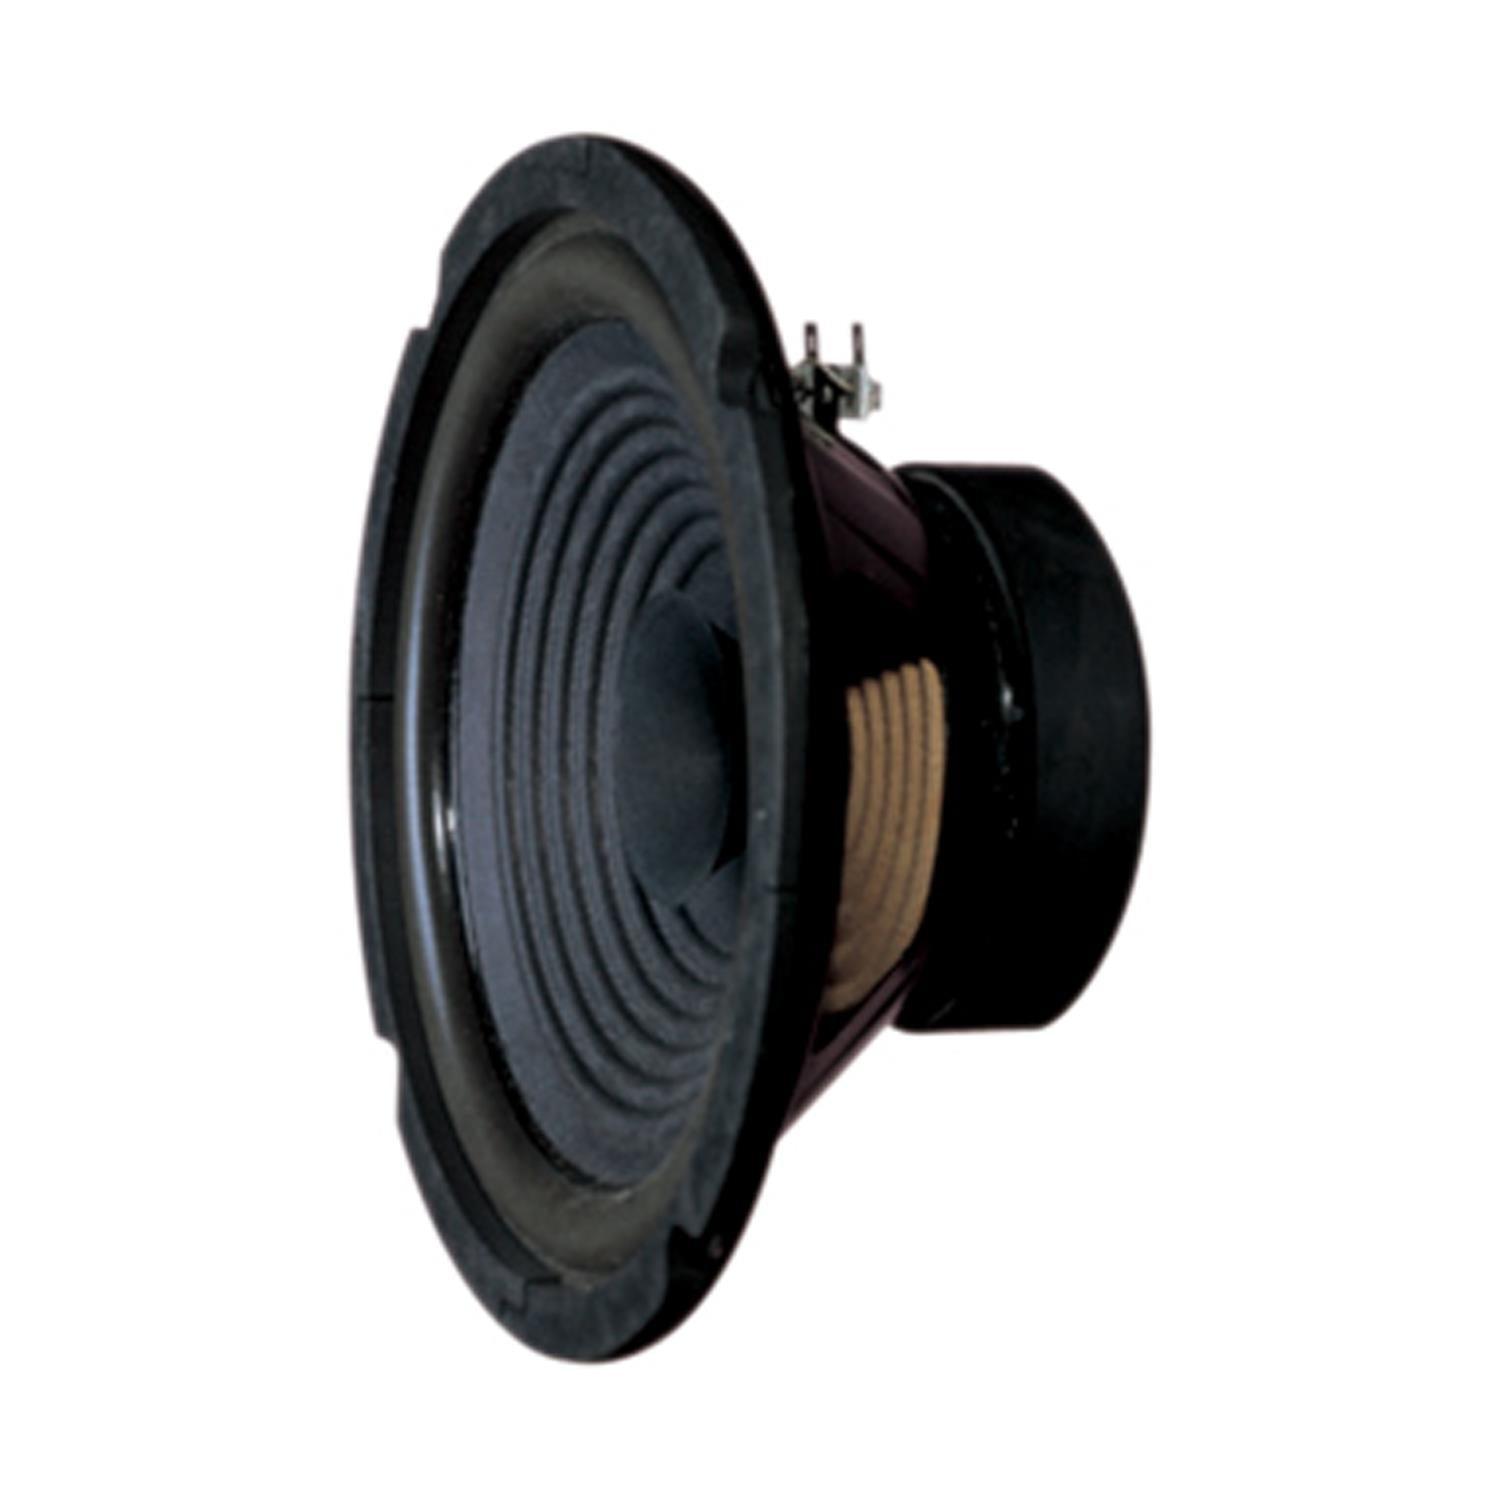 Soundlab 8" Chassis Speaker Full Range Driver 40w 4 ohm - DY Pro Audio